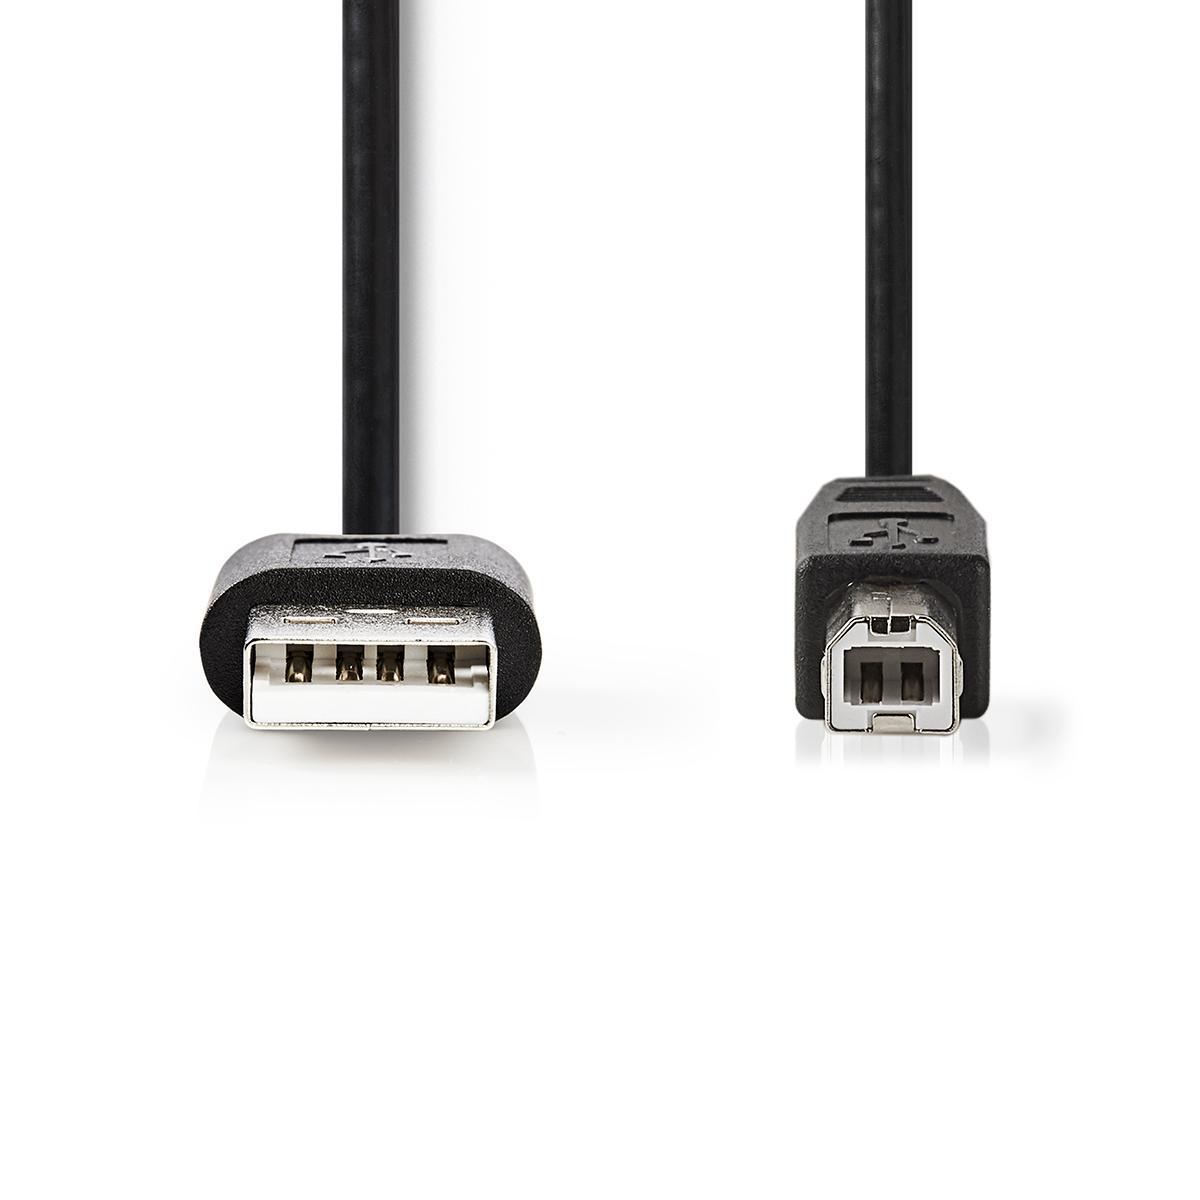 NEDIS CCGT60100BK30 USB-Kabel